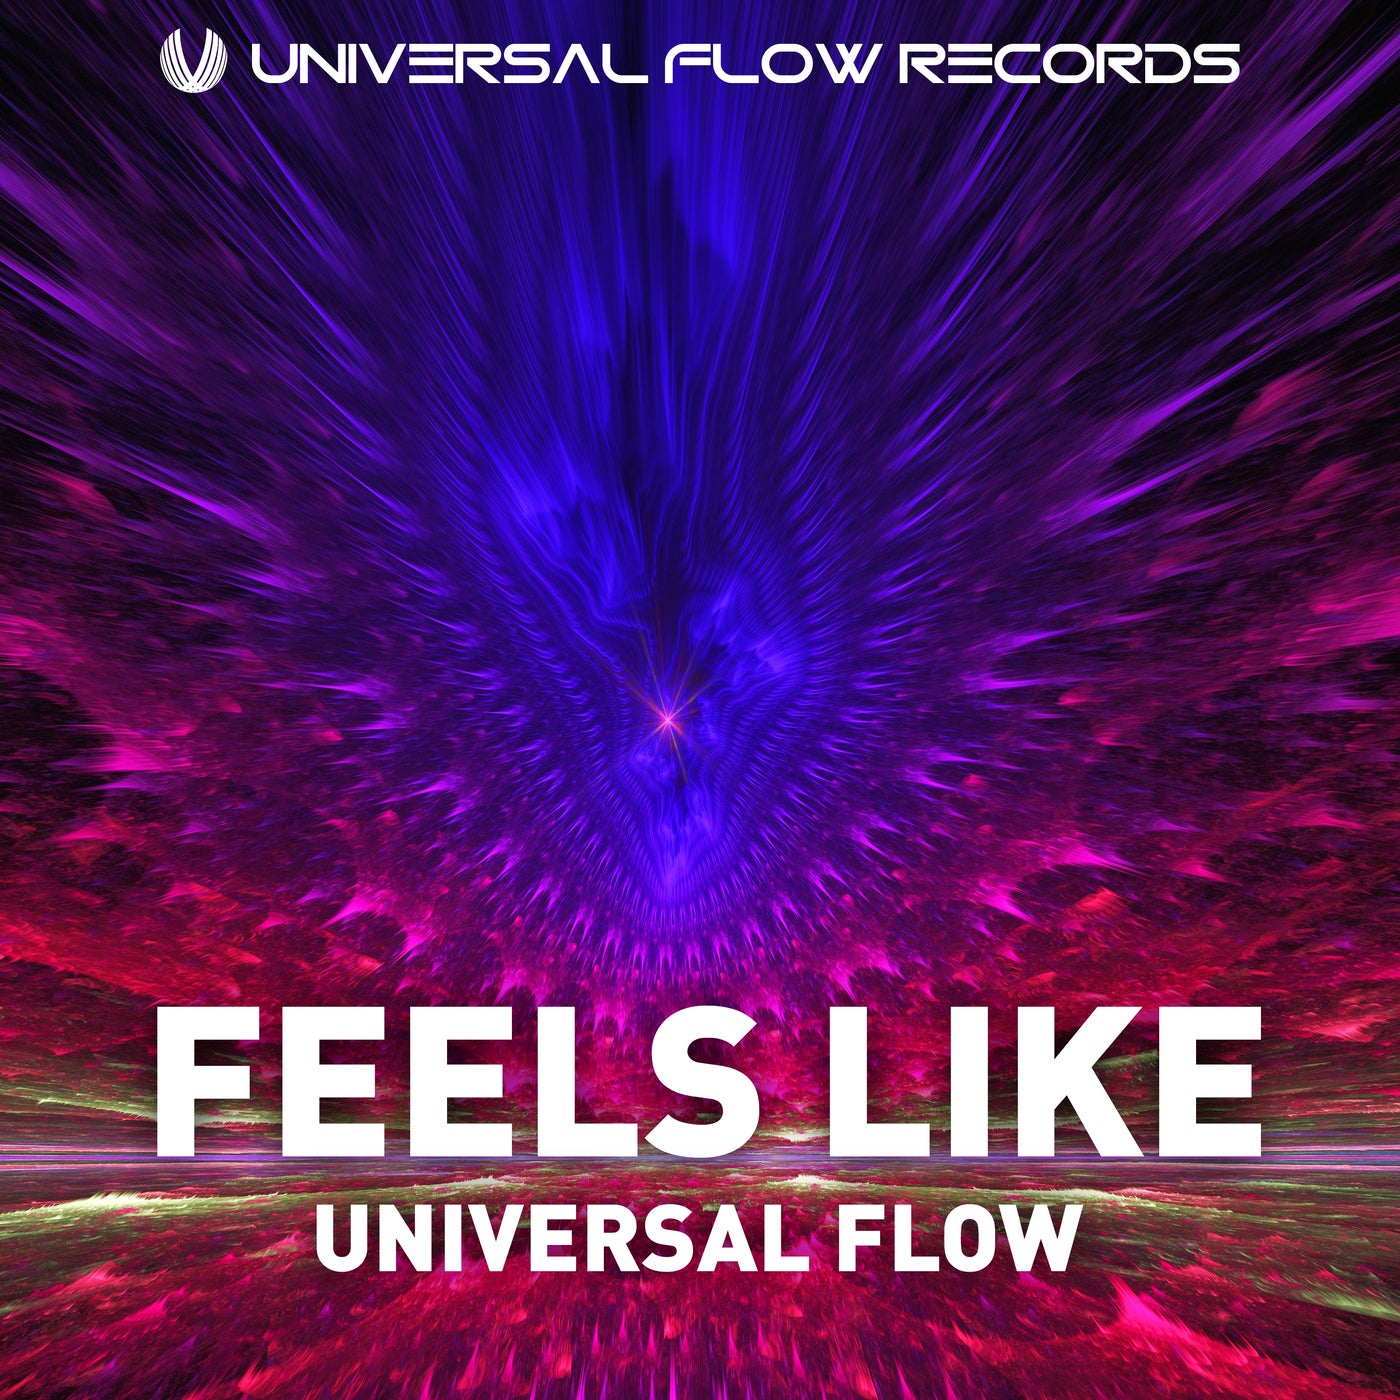 Universal Flow. Universal Flo. Feeling flow